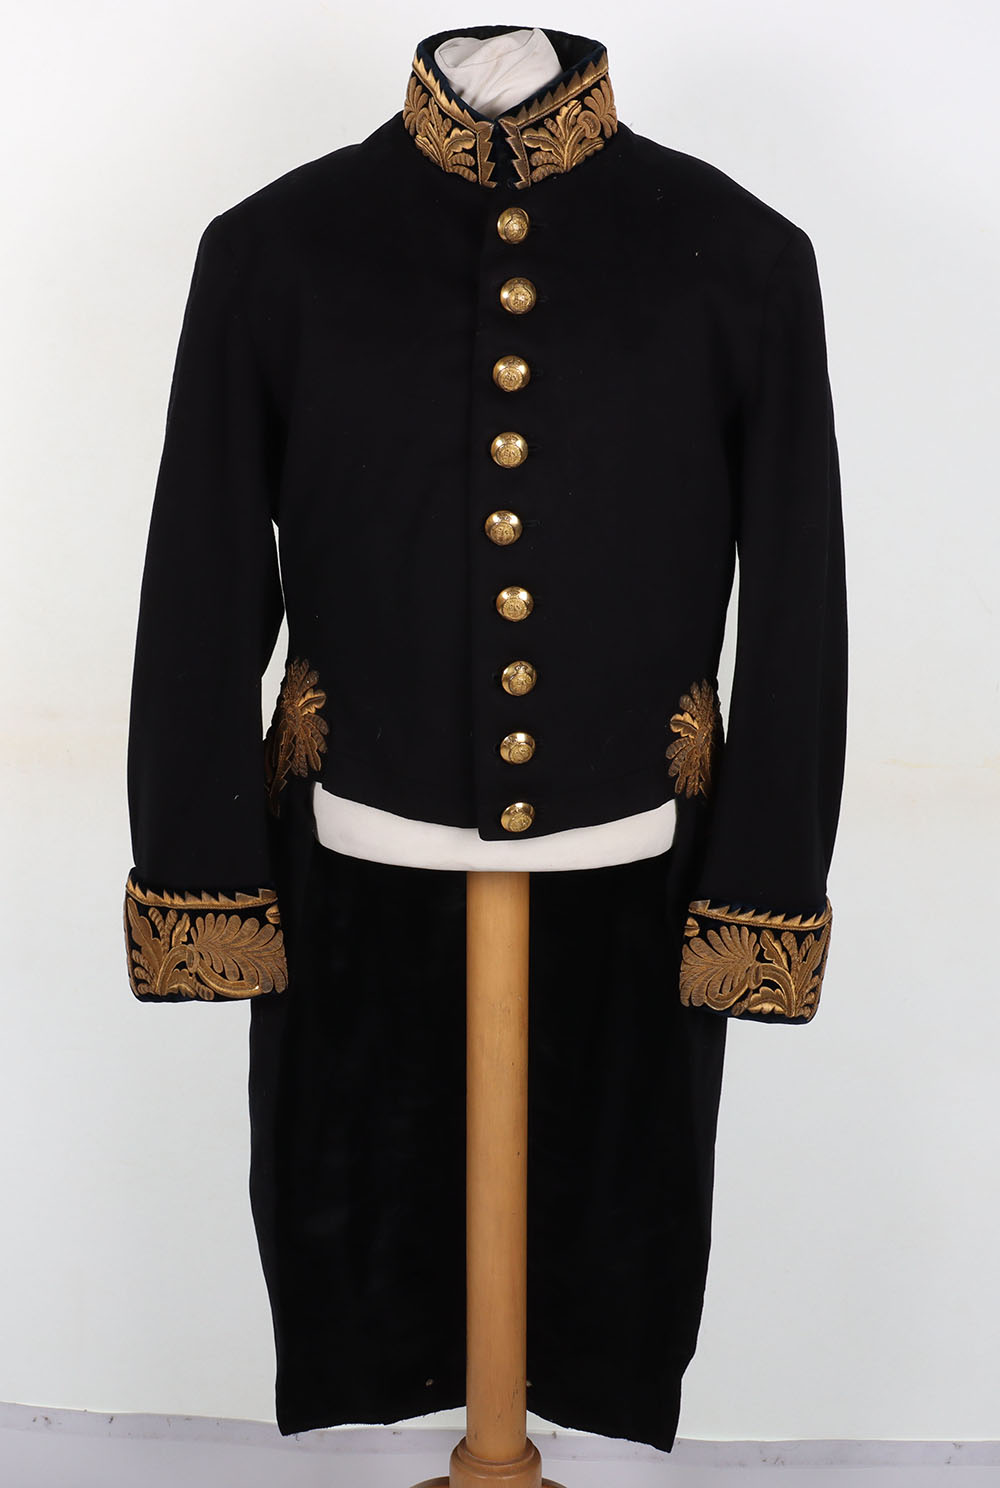 British Diplomatic Service Full Dress Uniform - Image 2 of 21